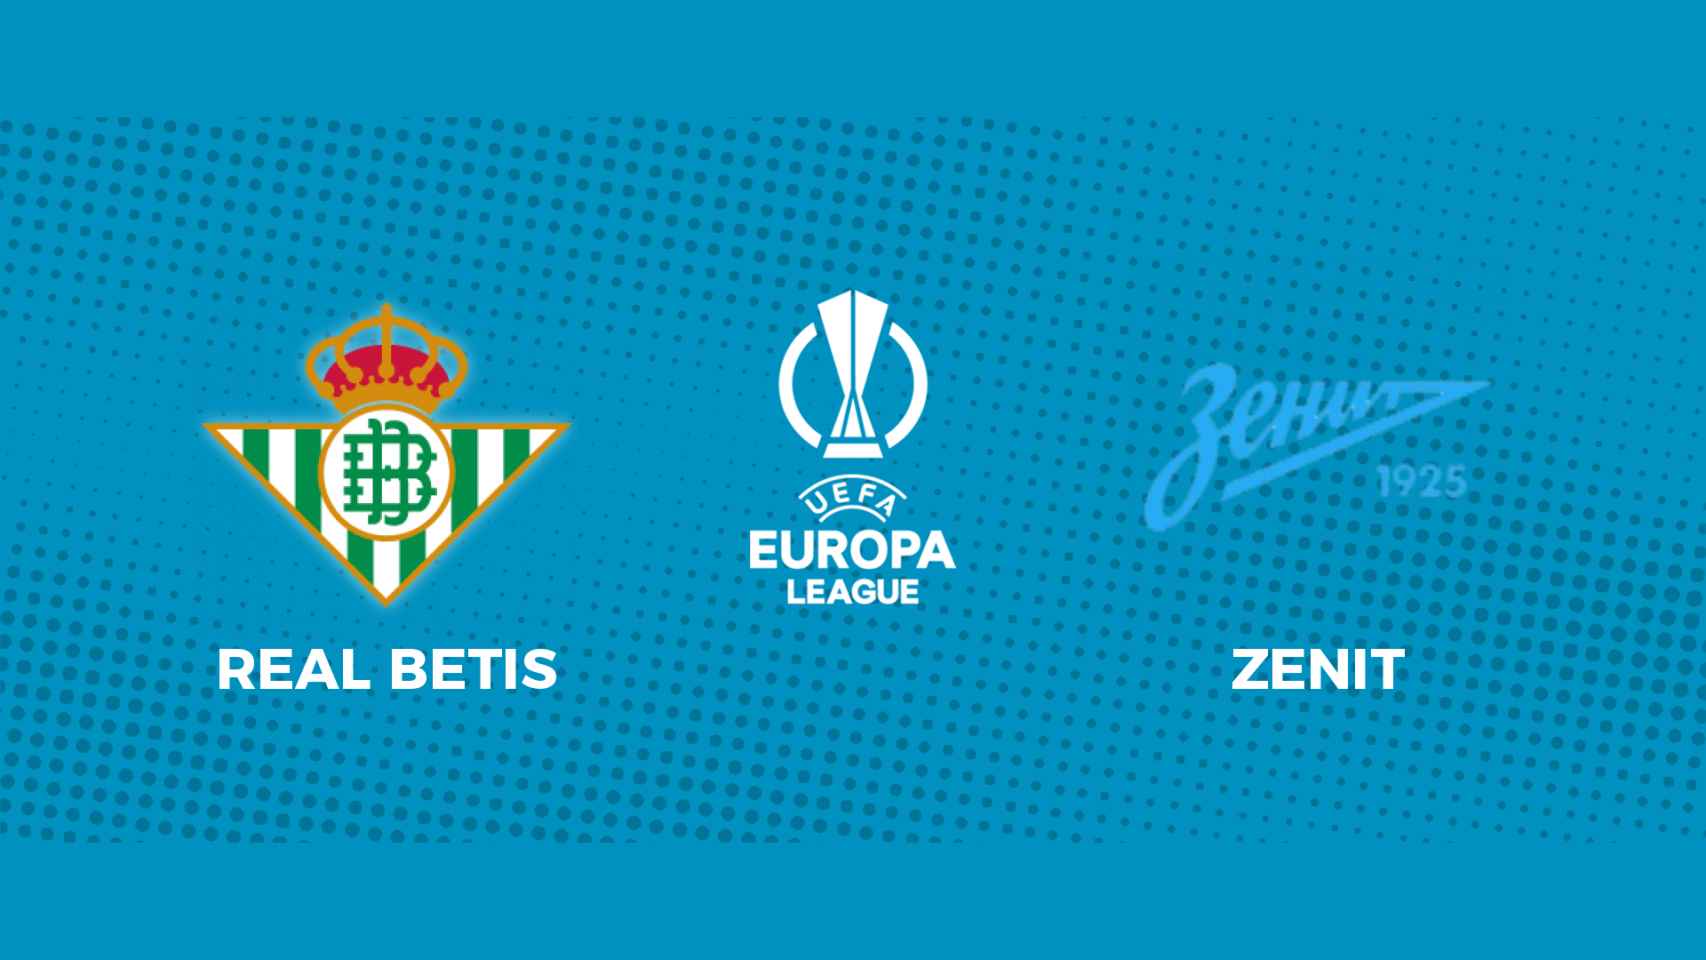 Real Betis - Zenit: siga el partido de Europa League, en directo